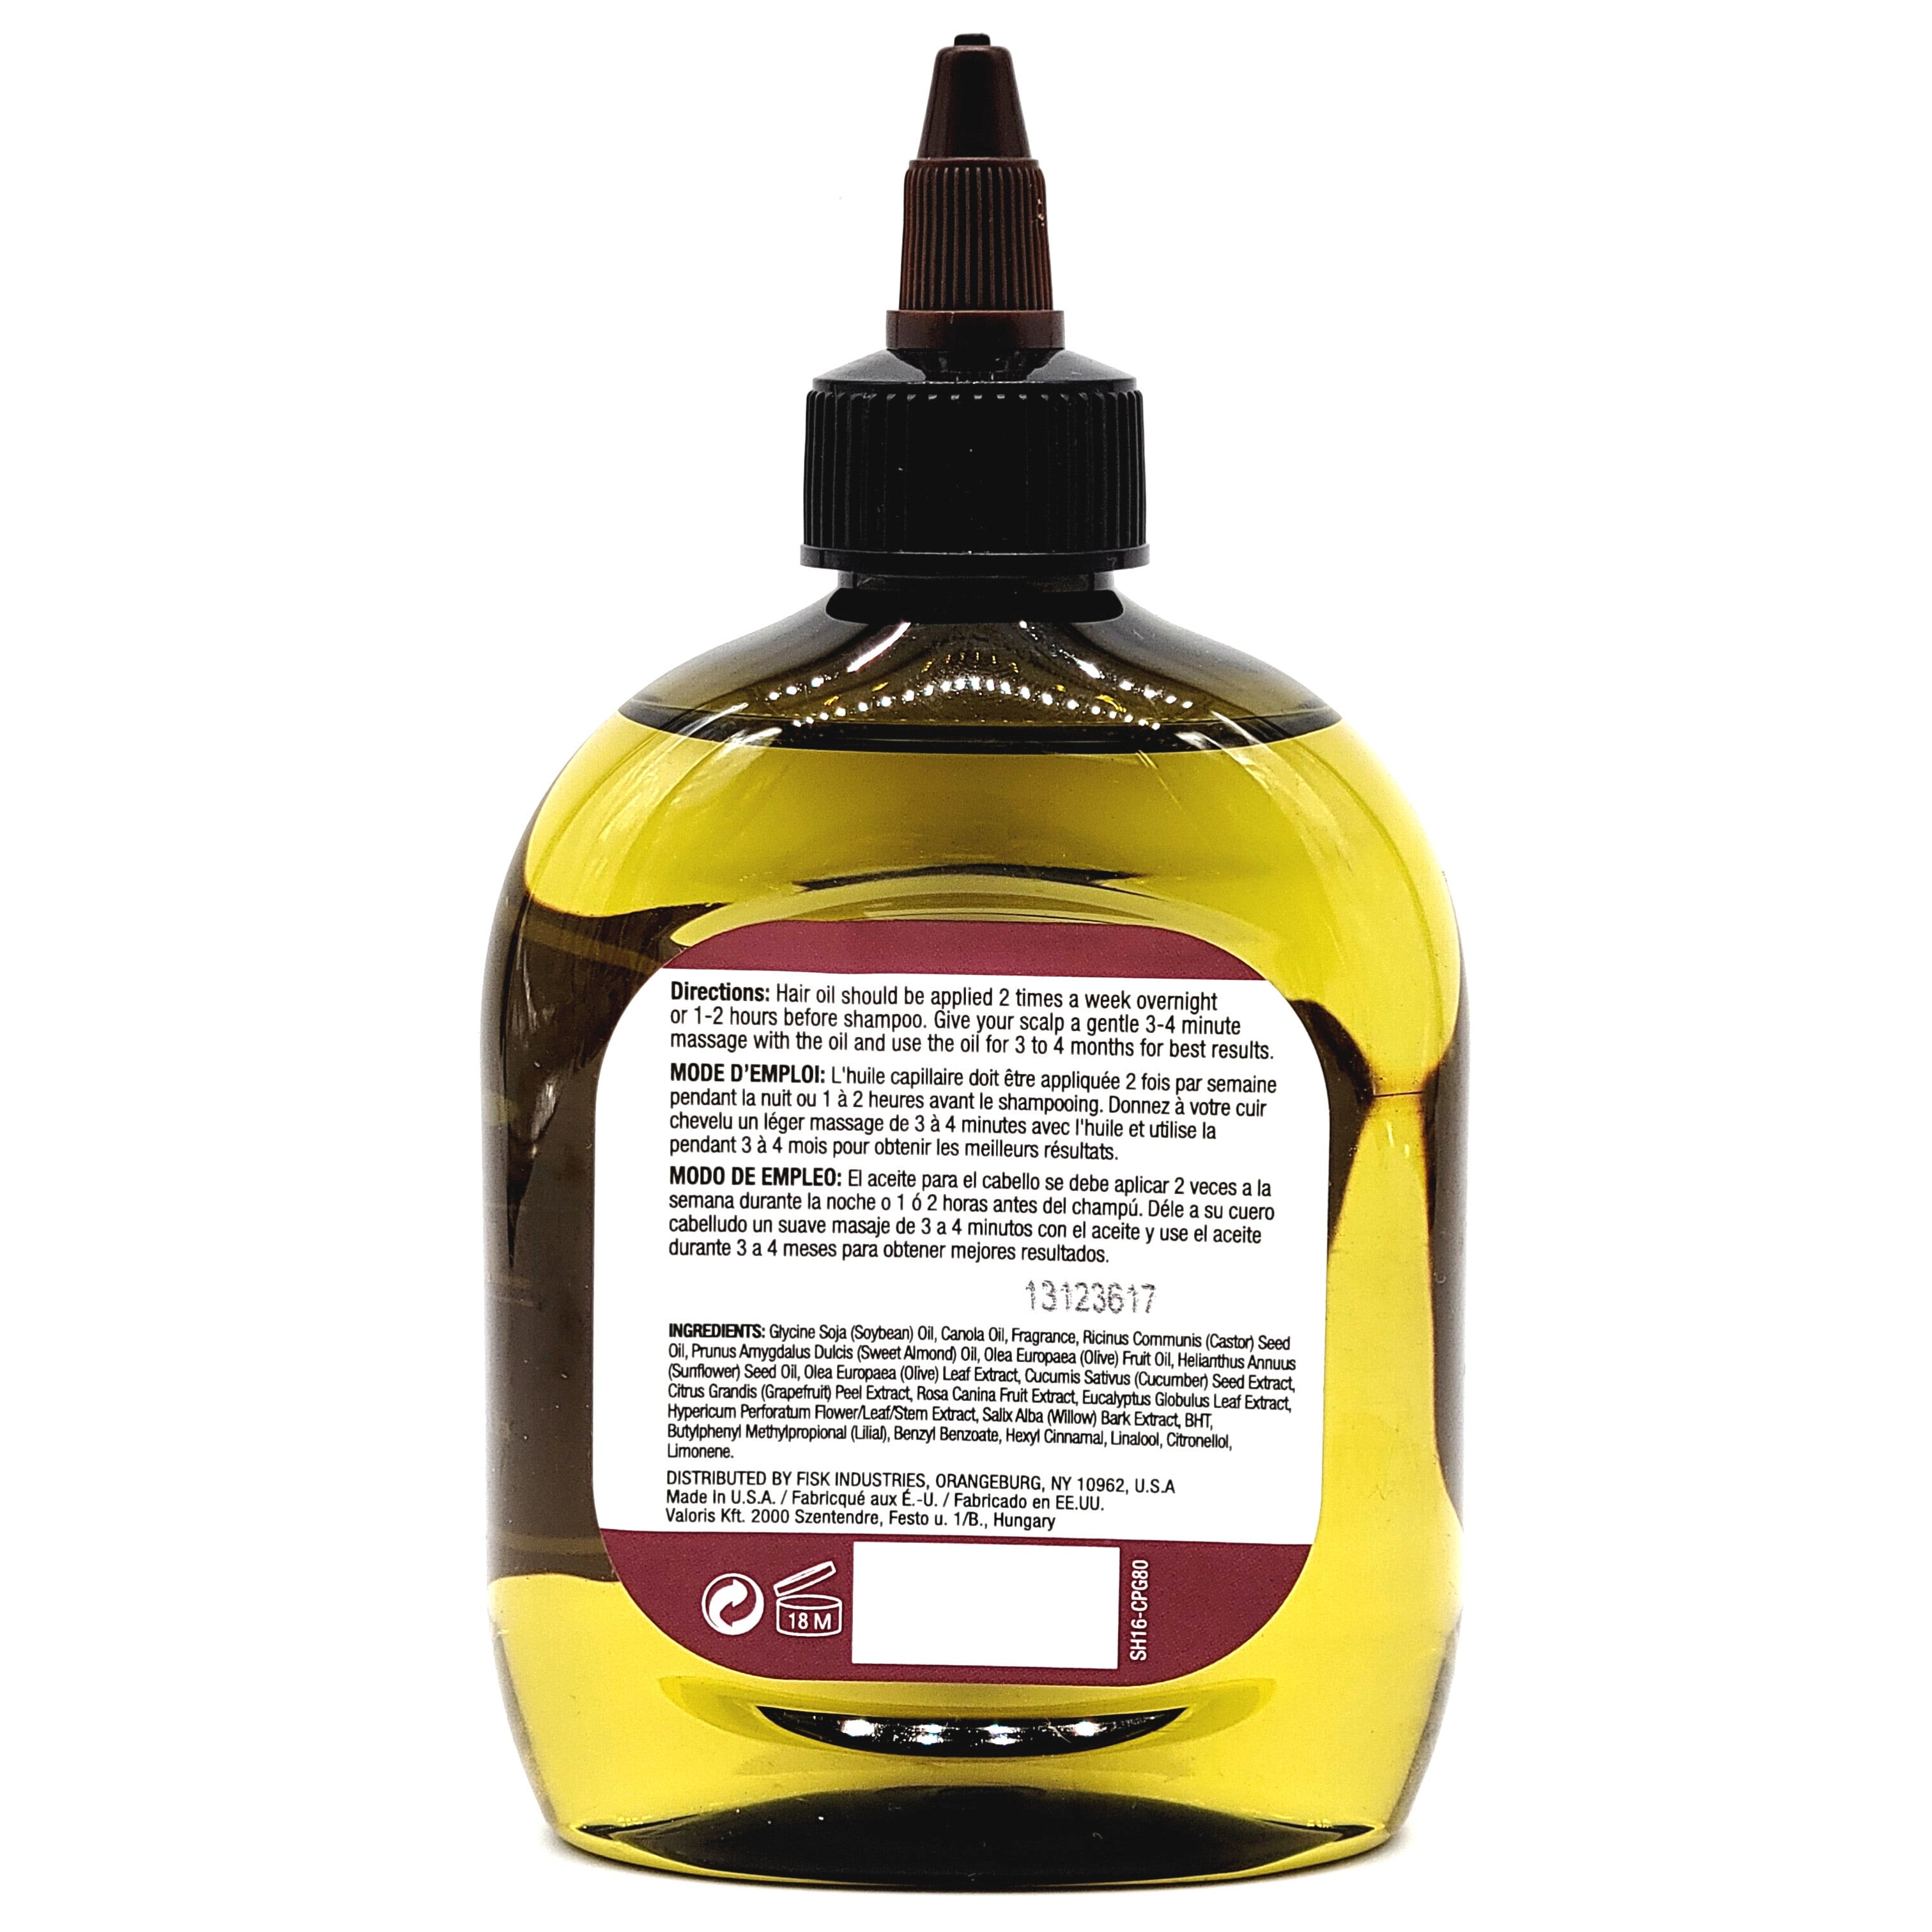 Difeel Castor Pro-Growth & Thicken Premium Hair Oil 7.1 oz. - Deluxe 2-PC Gift Set